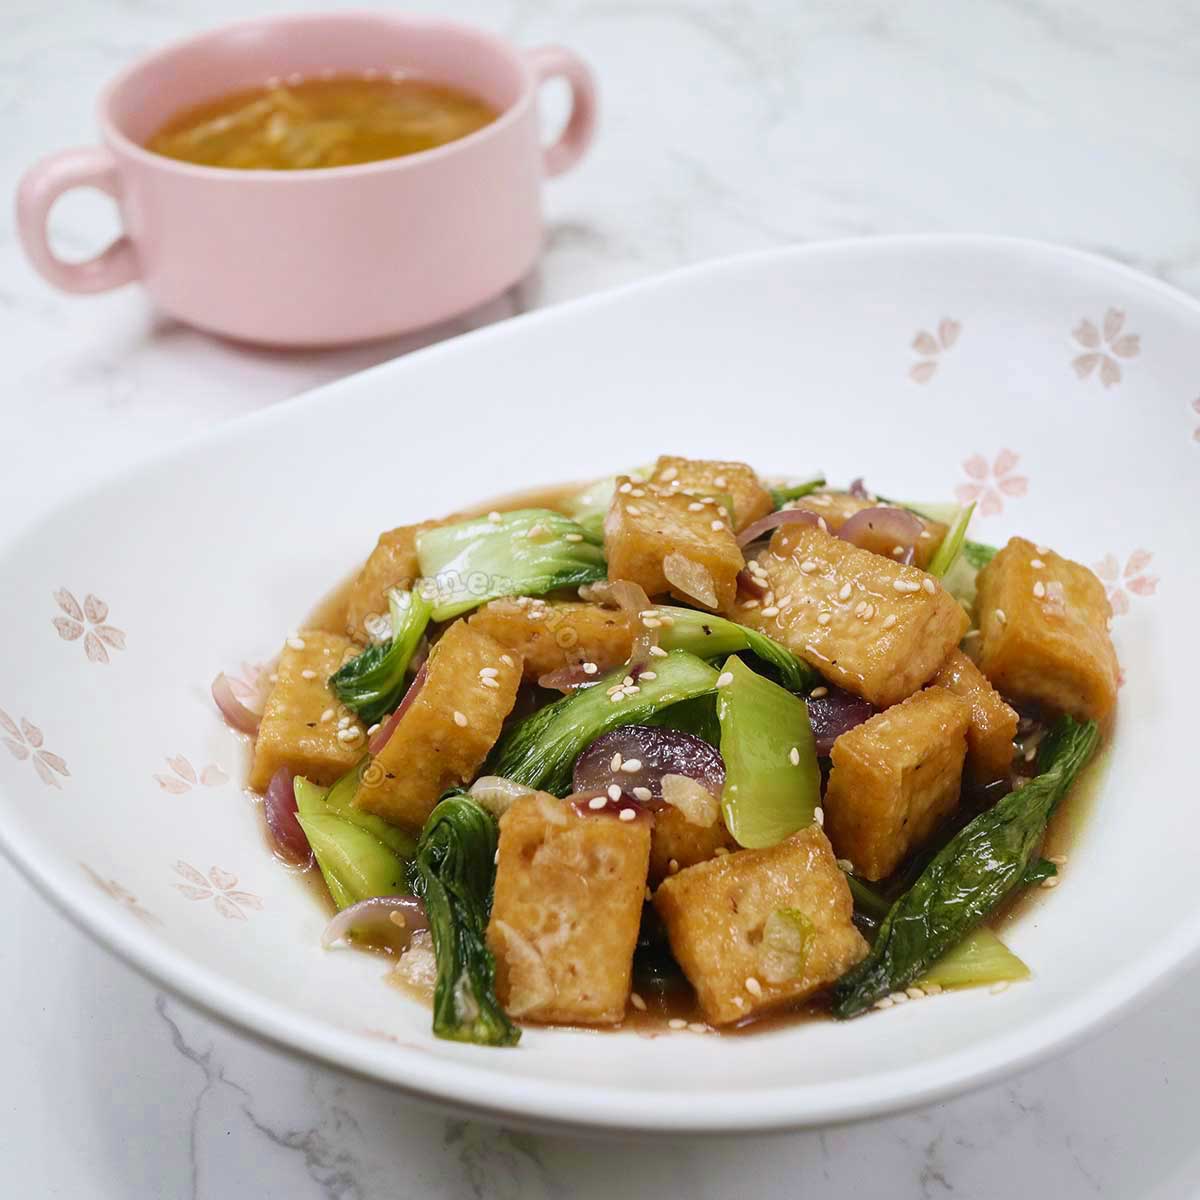 Tofu and bok choy stir fry